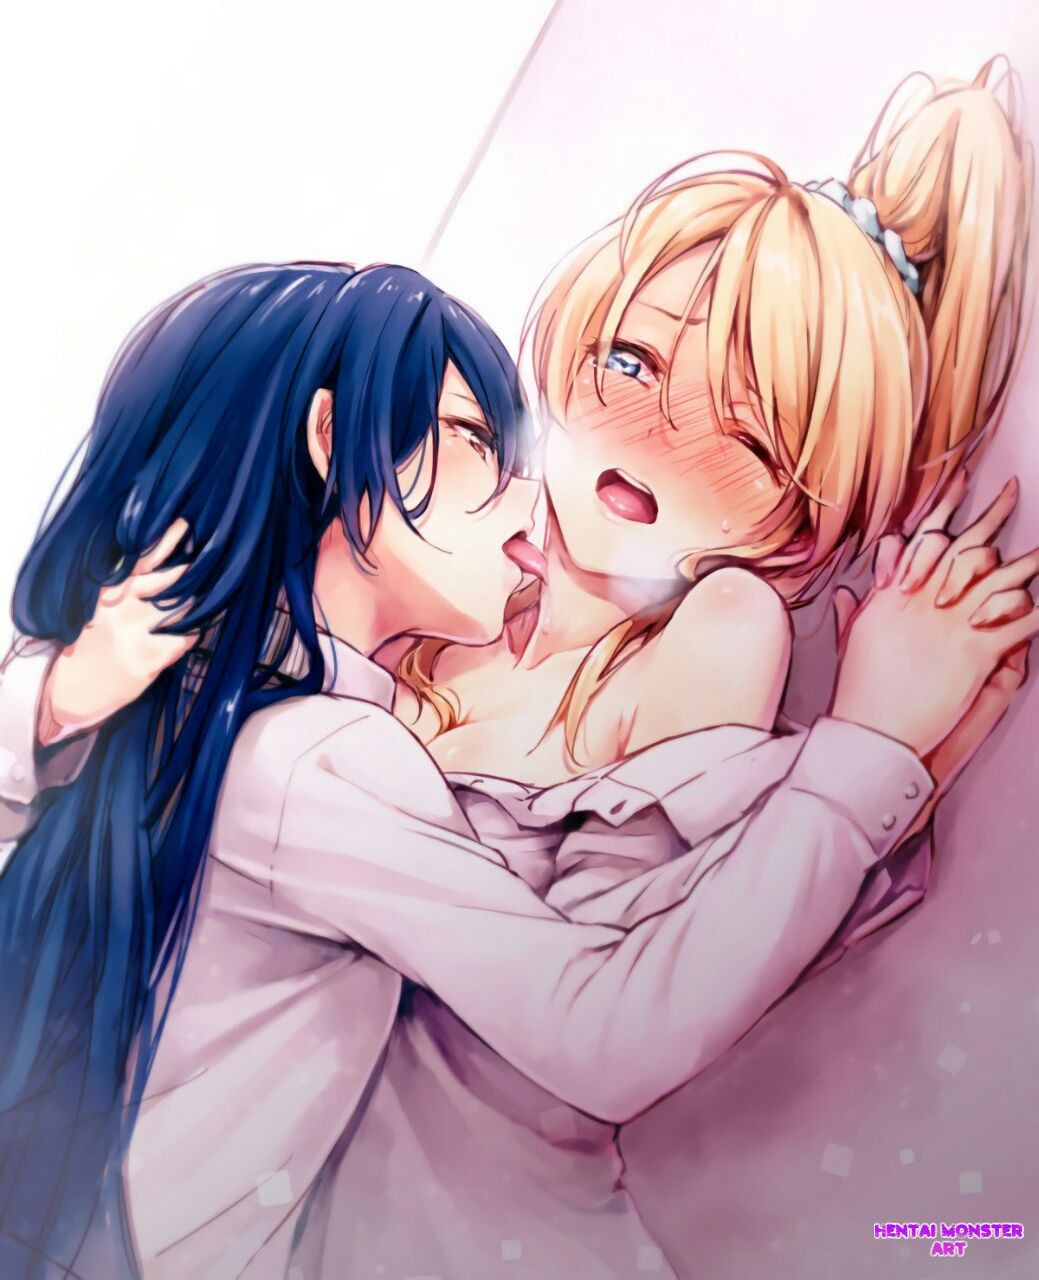 Lesbian anime art